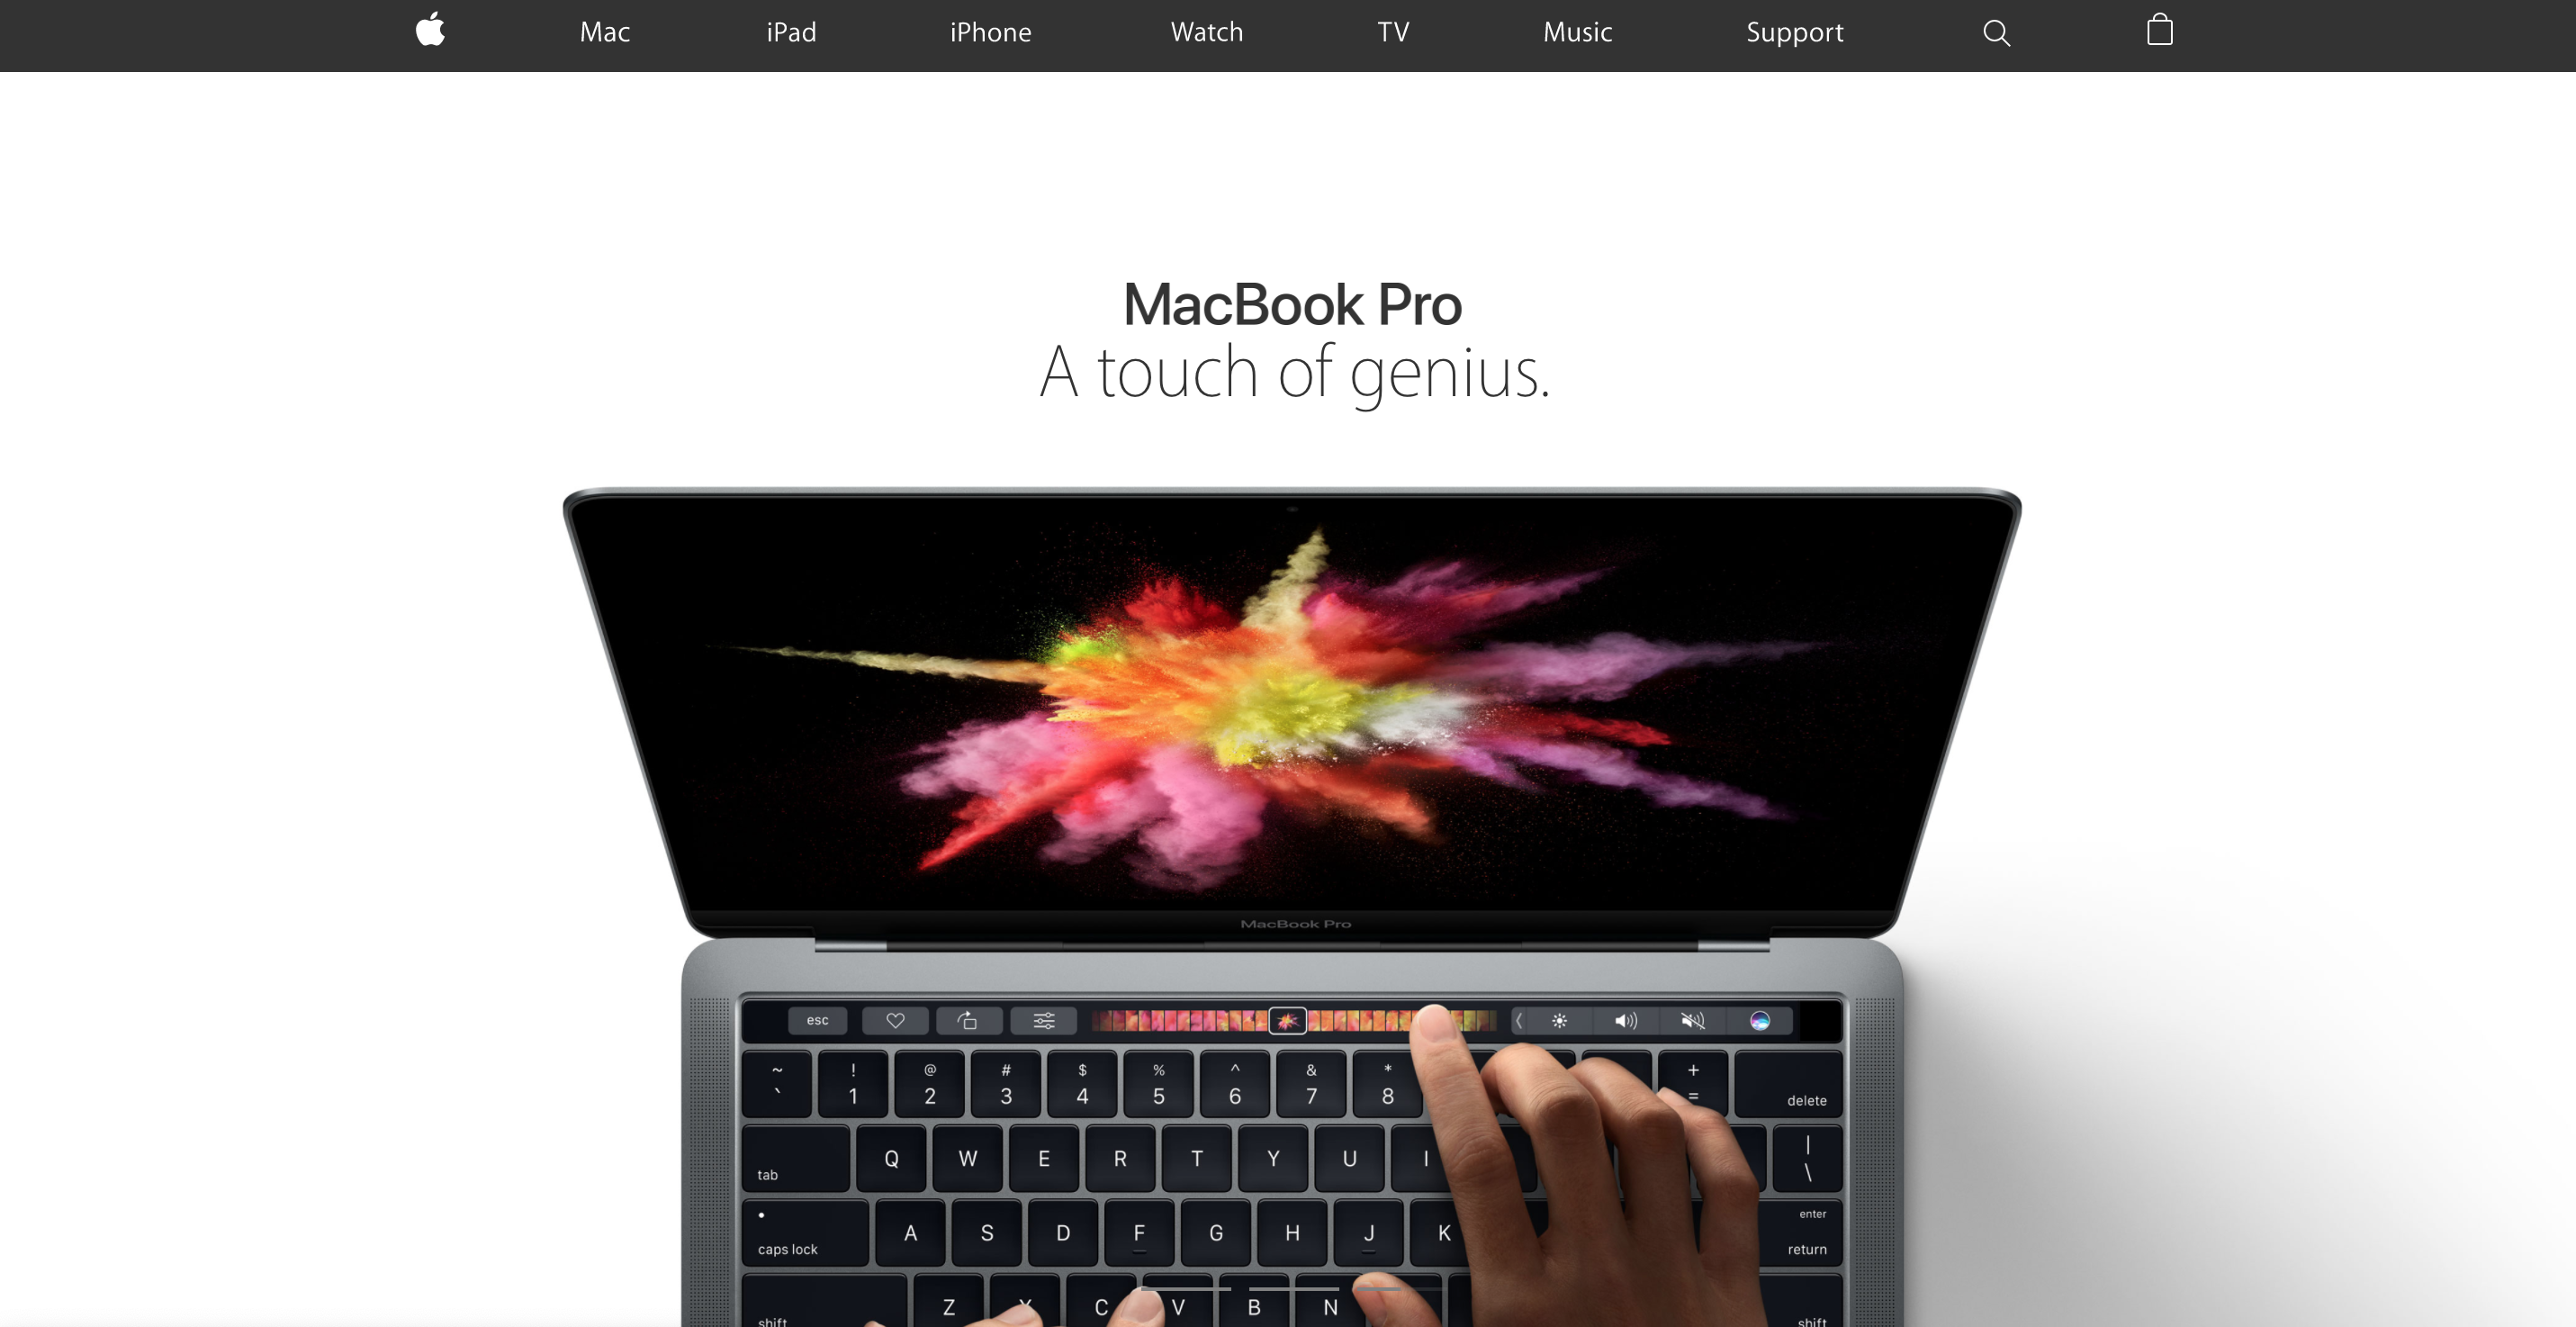 apple.com Website Design in 2017